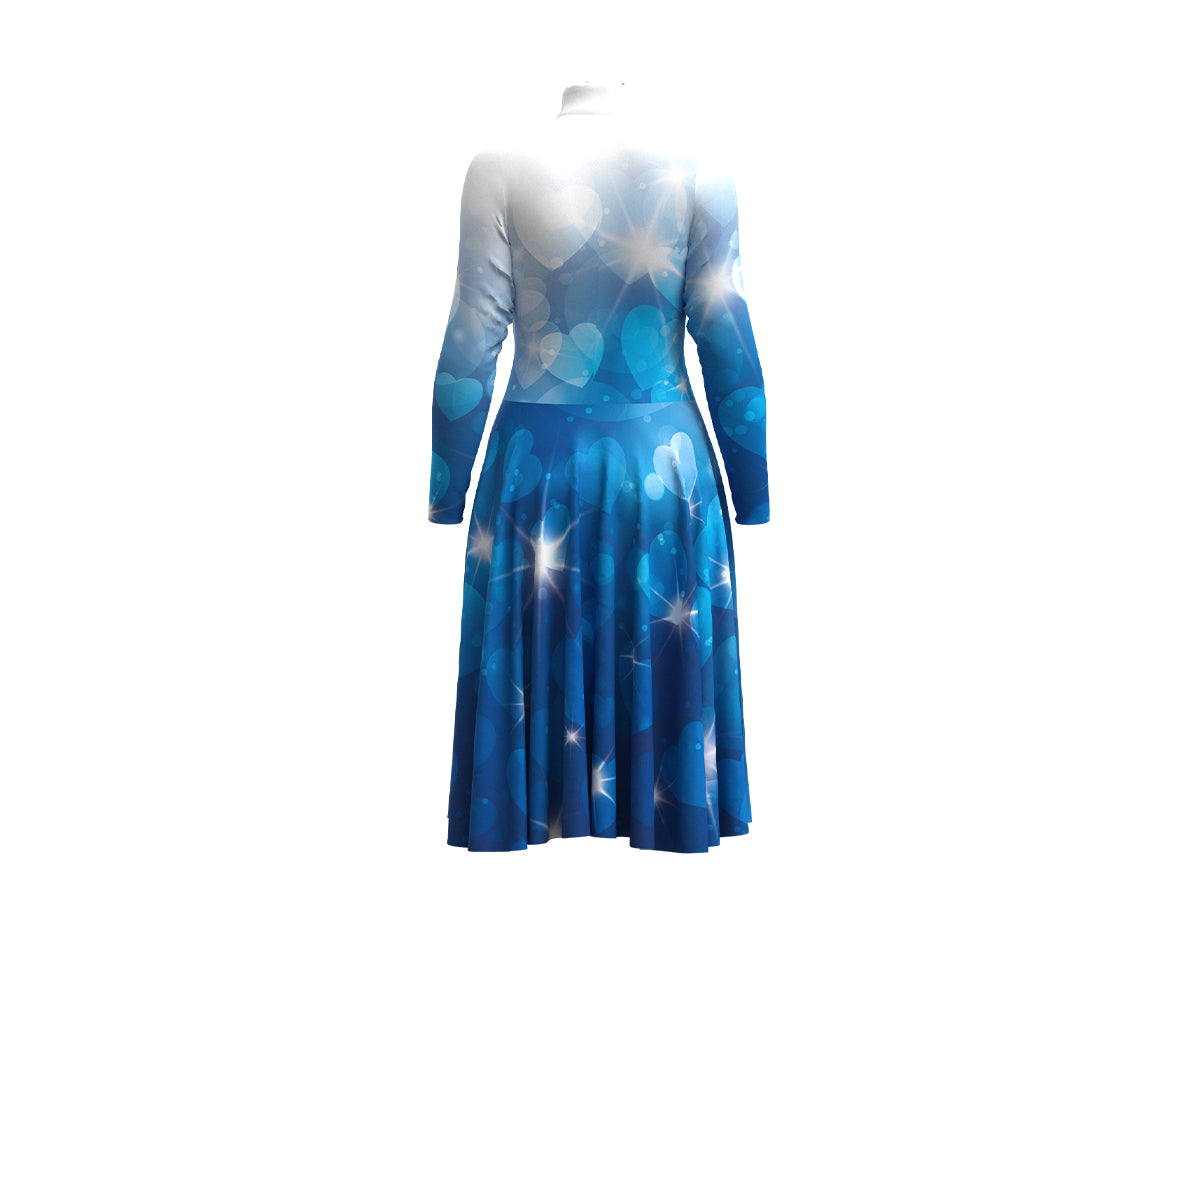 Blue Sparkle Dress